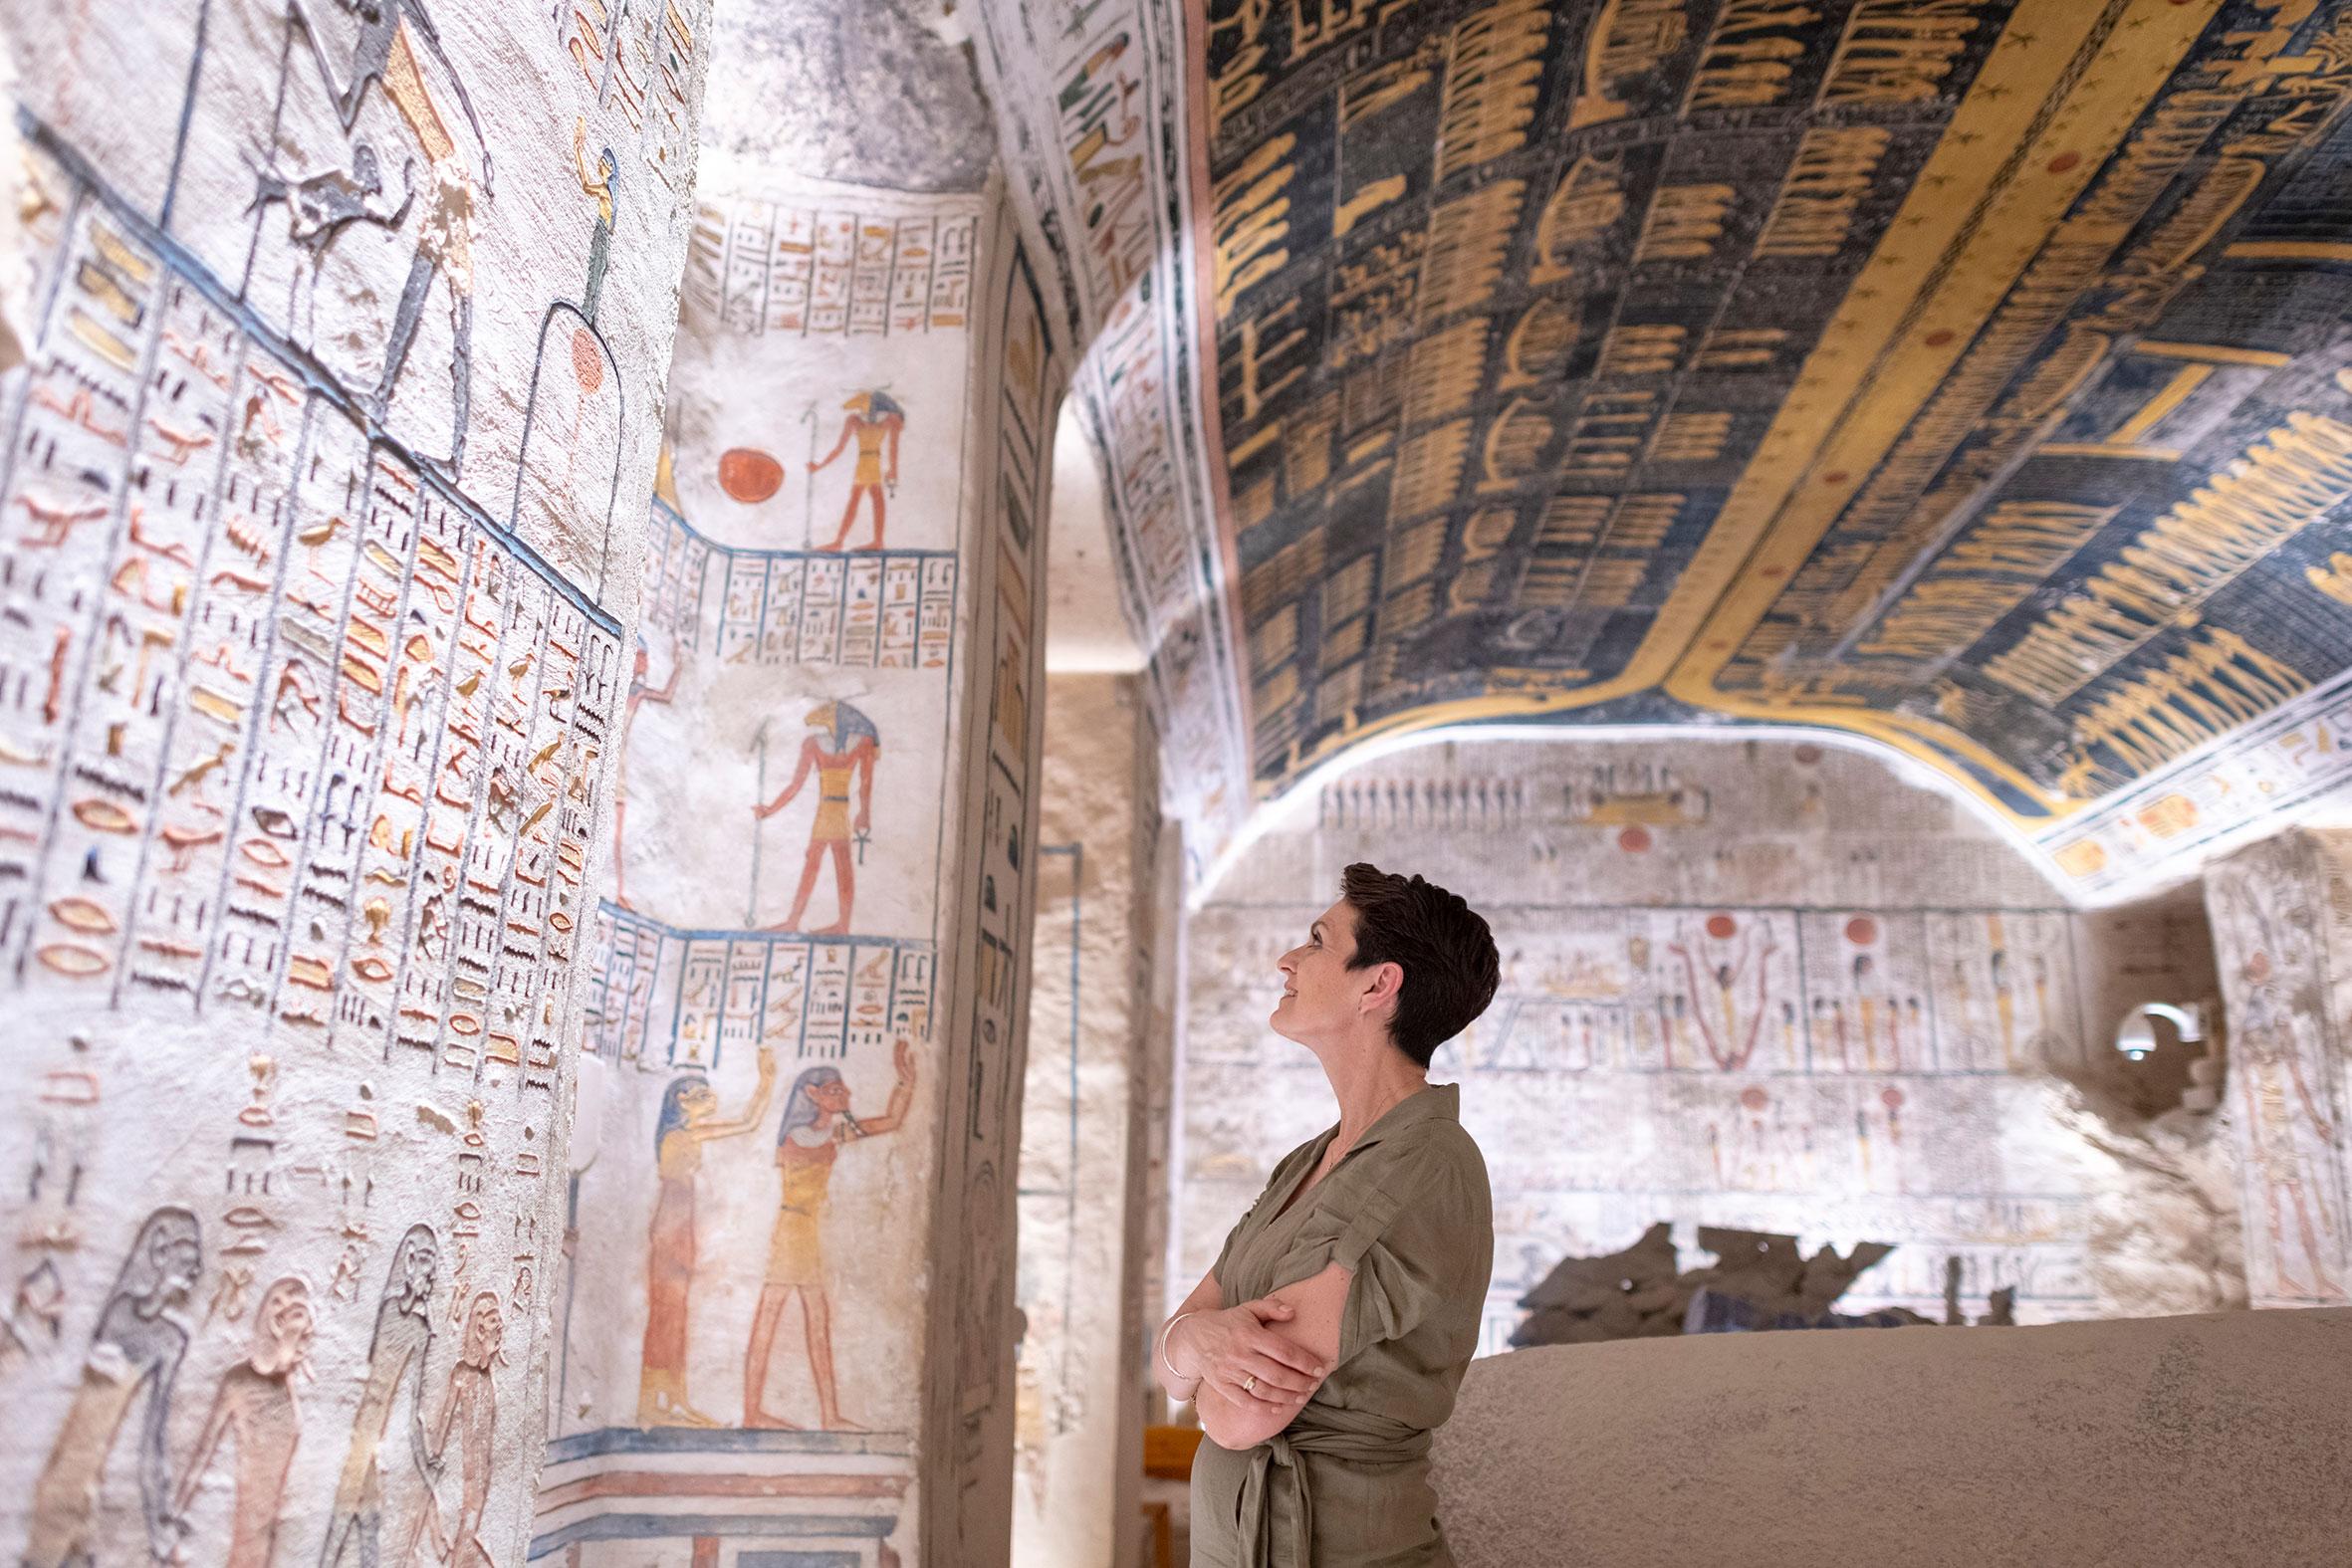 Splendours of Egypt Womens Only Guided Tour